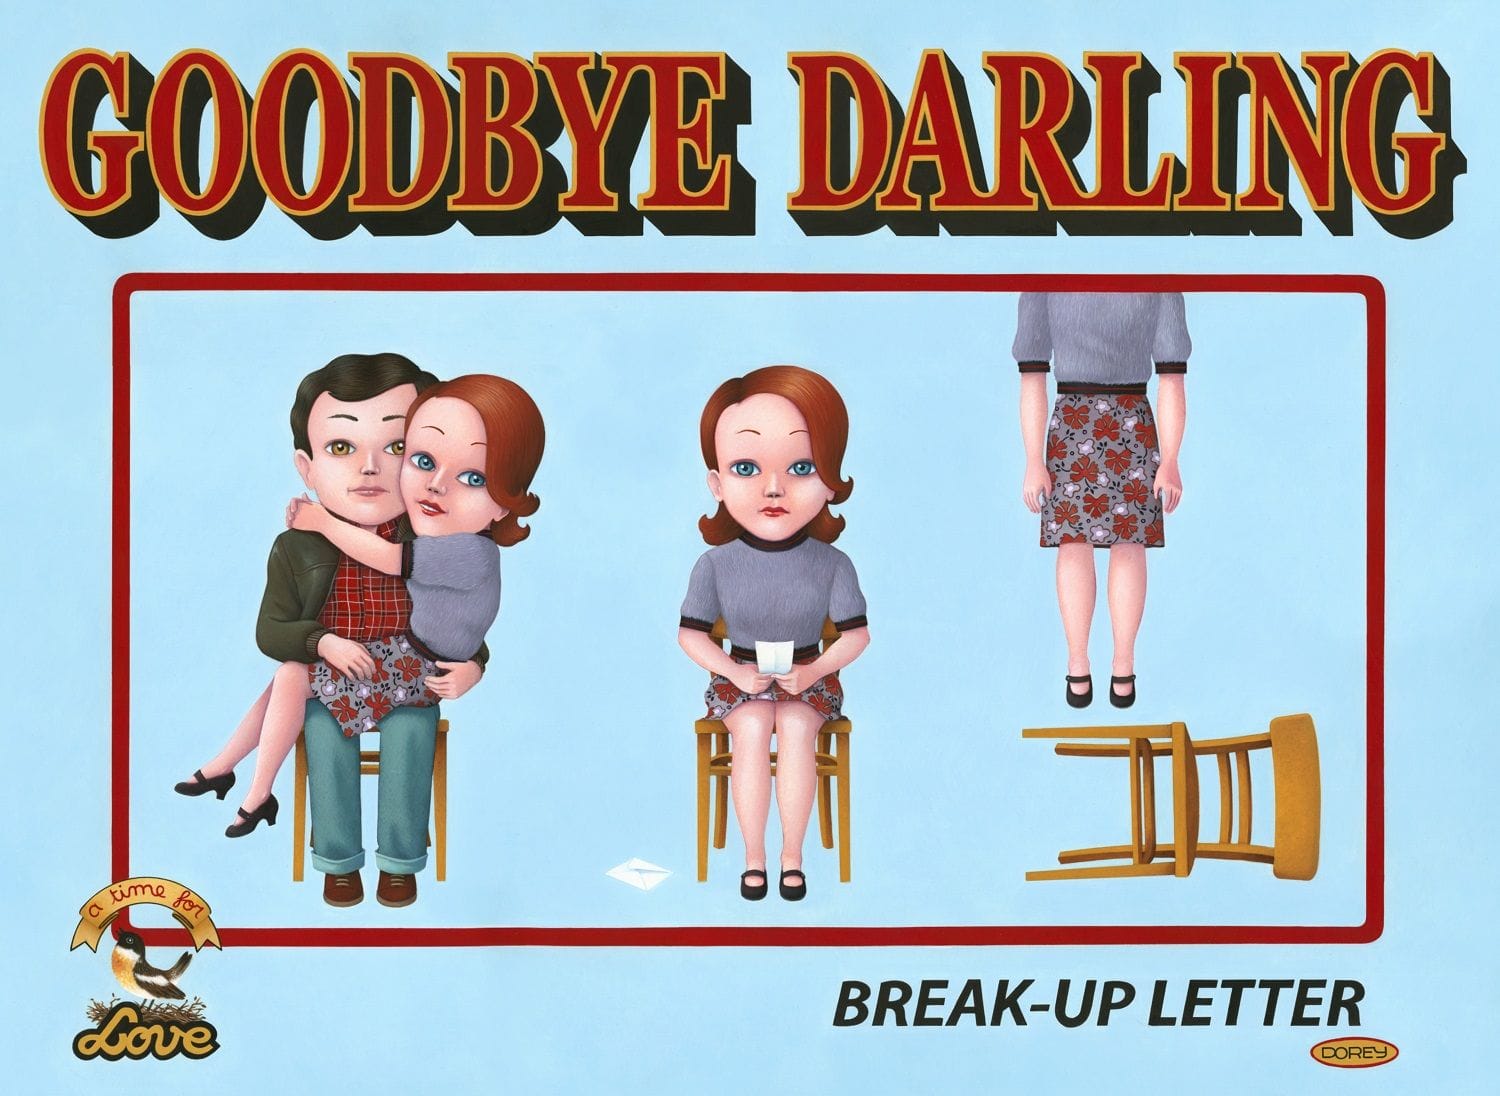 "Good Bye Darling"